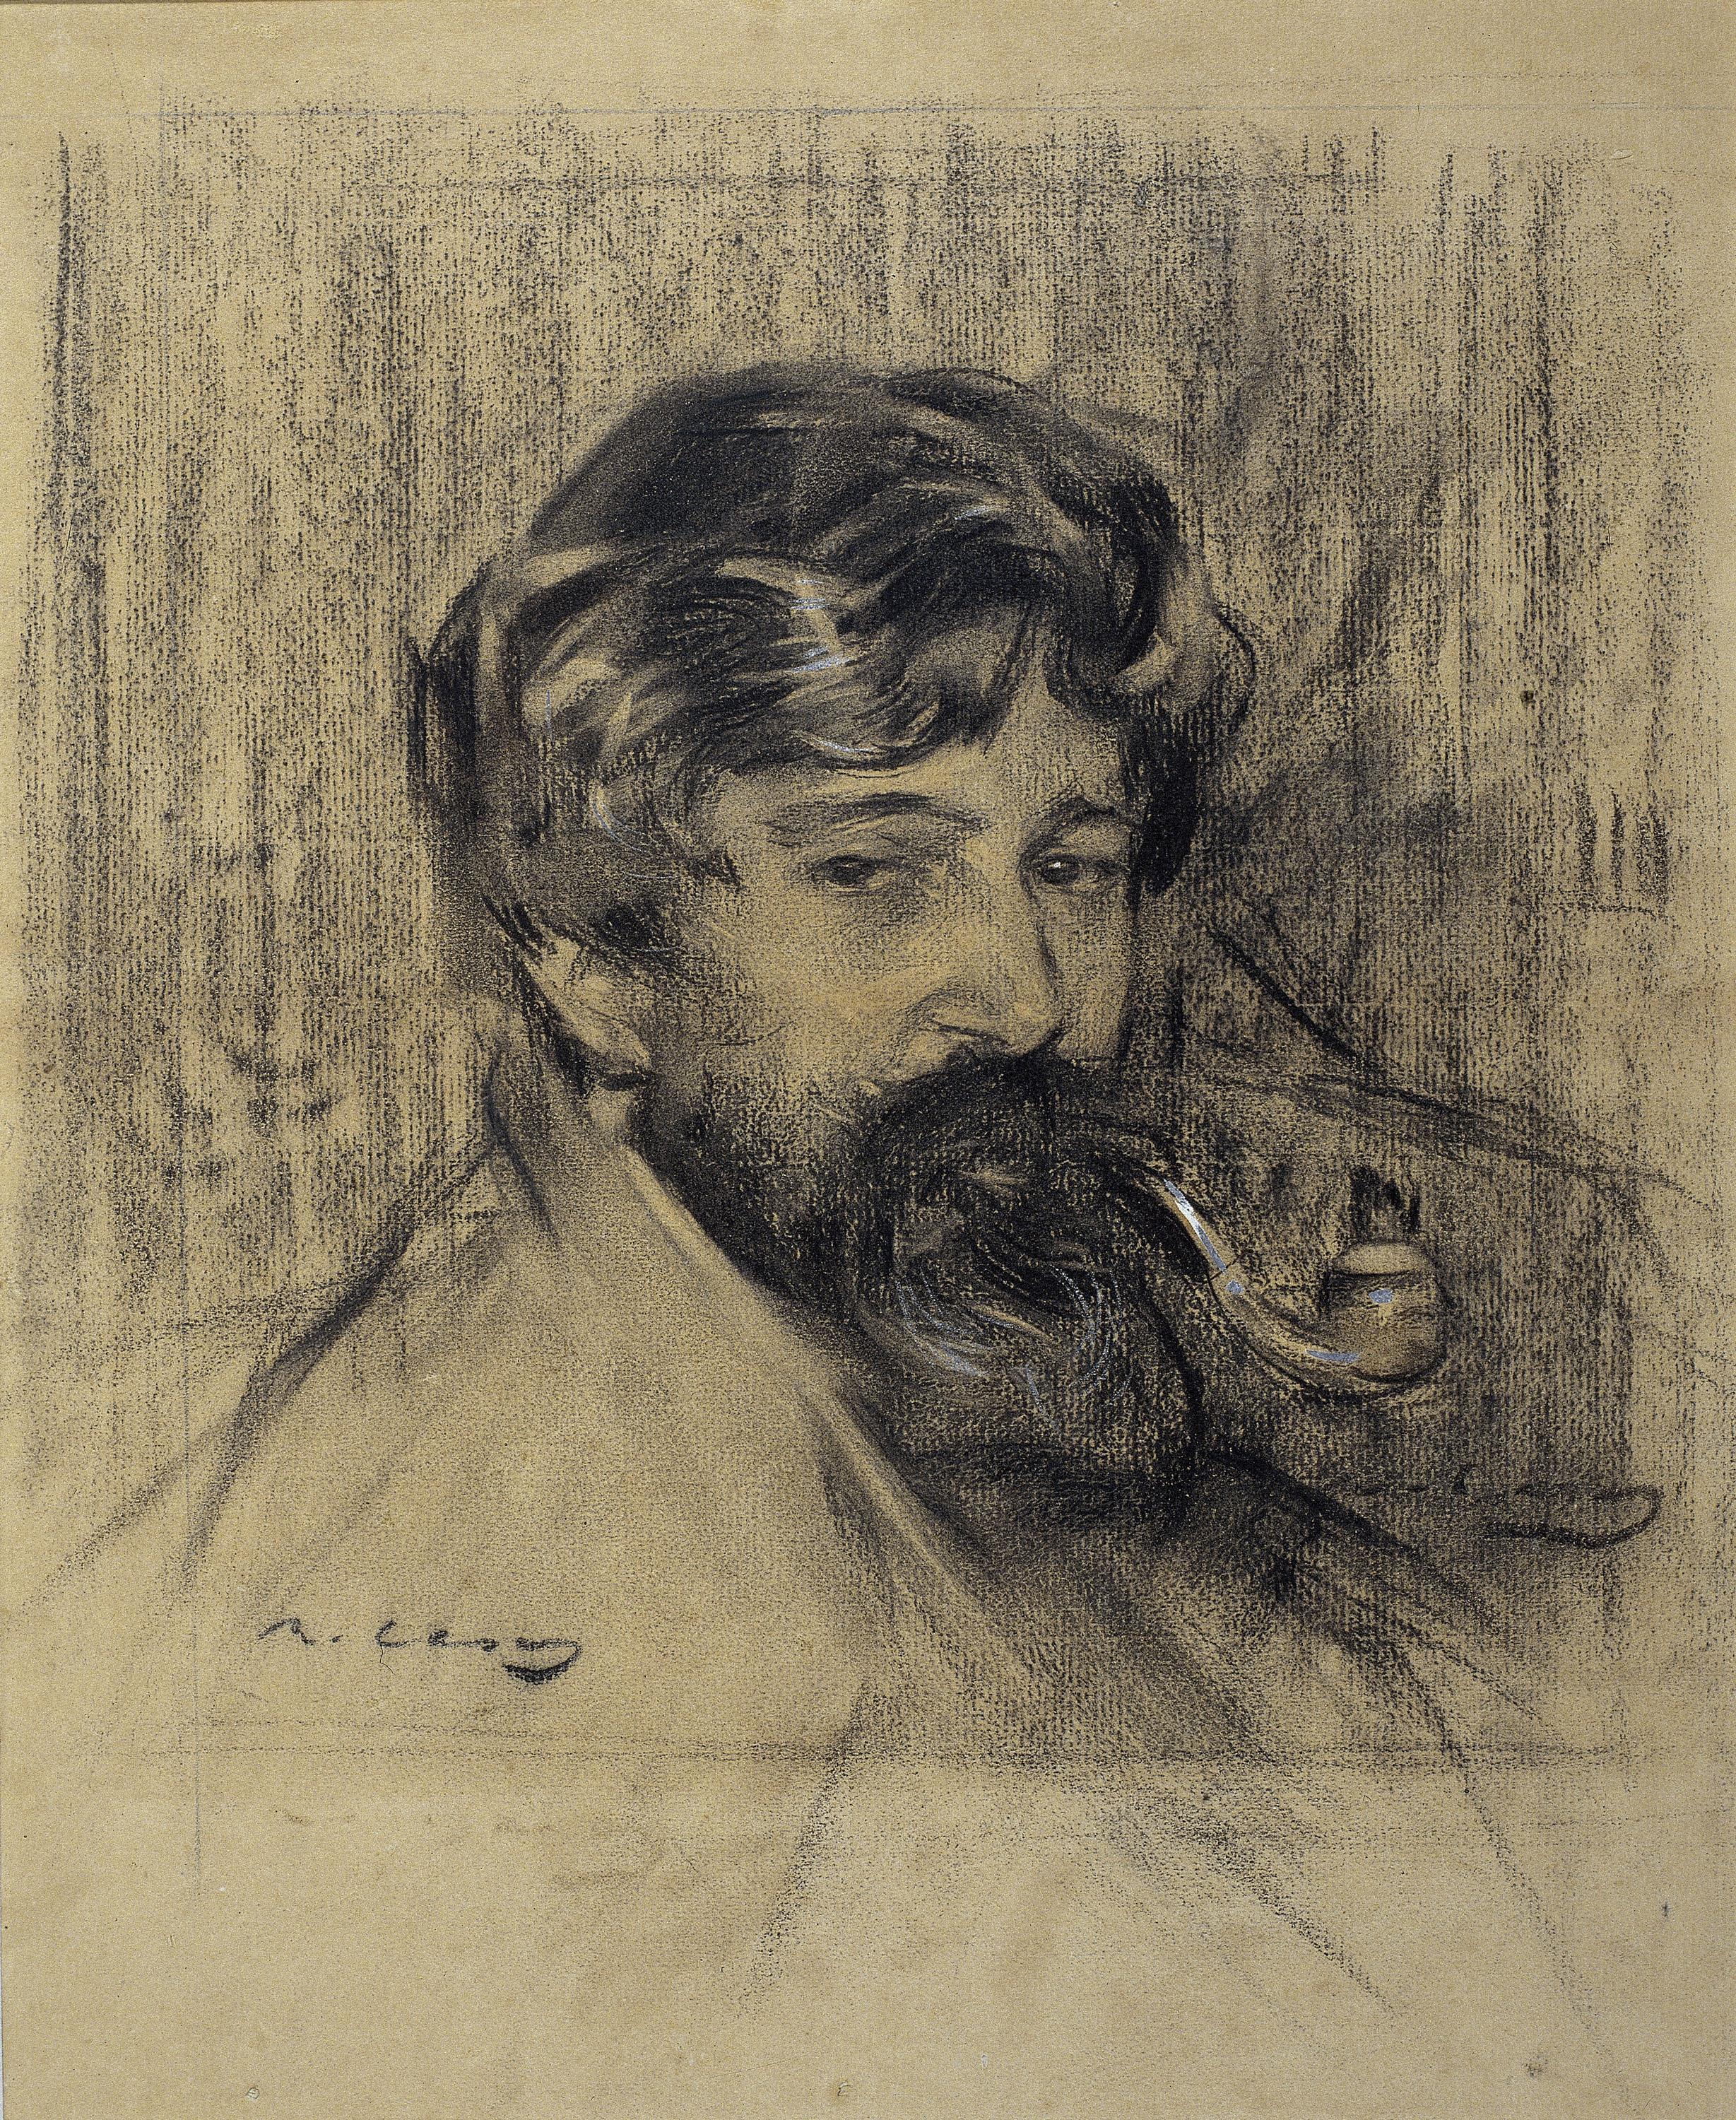 Ramon Casas, Portrait of Santiago Rusiñol, around 1900